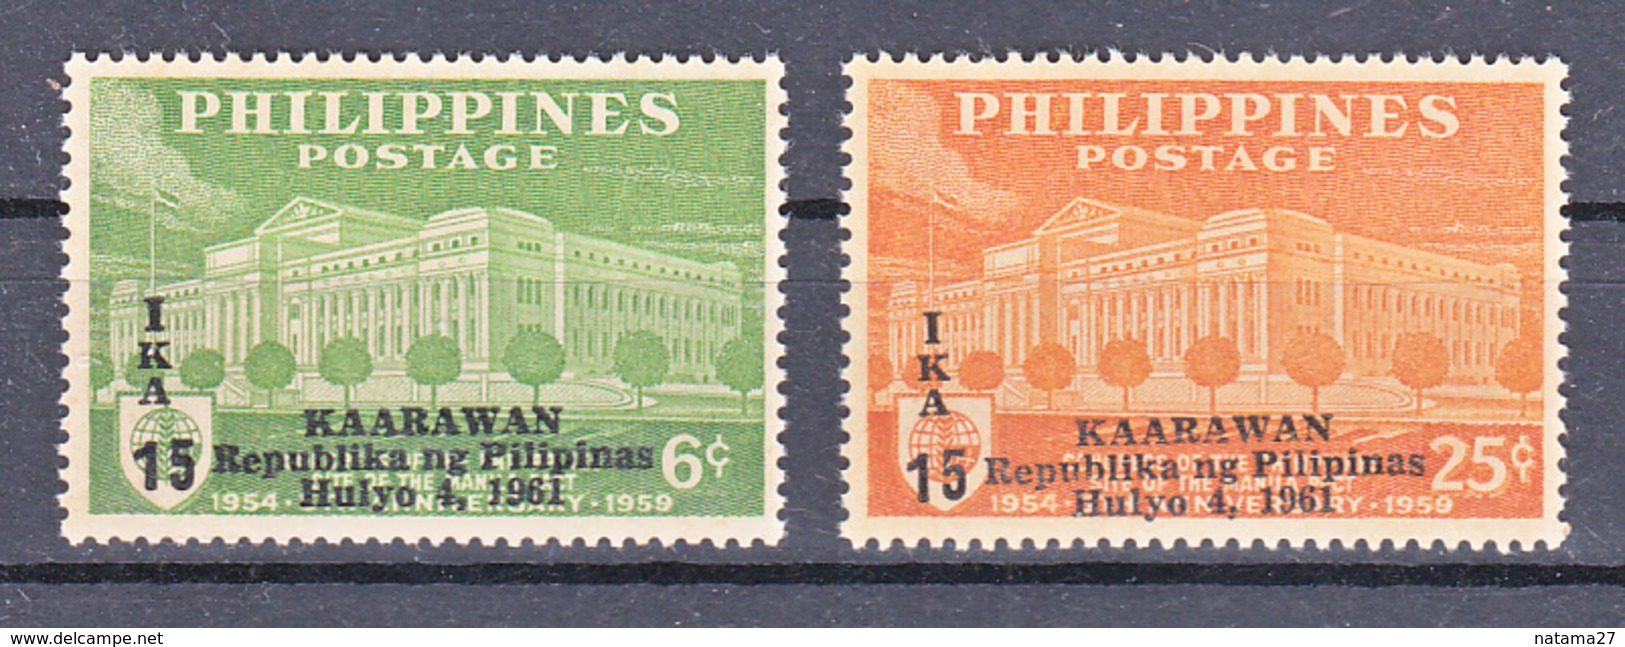 Filippine Philippines Philippinen Pilipinas 1961 Republic 15th Anniversary 1959 SEATO Overprinted Toned Gum MNH** - Filippine